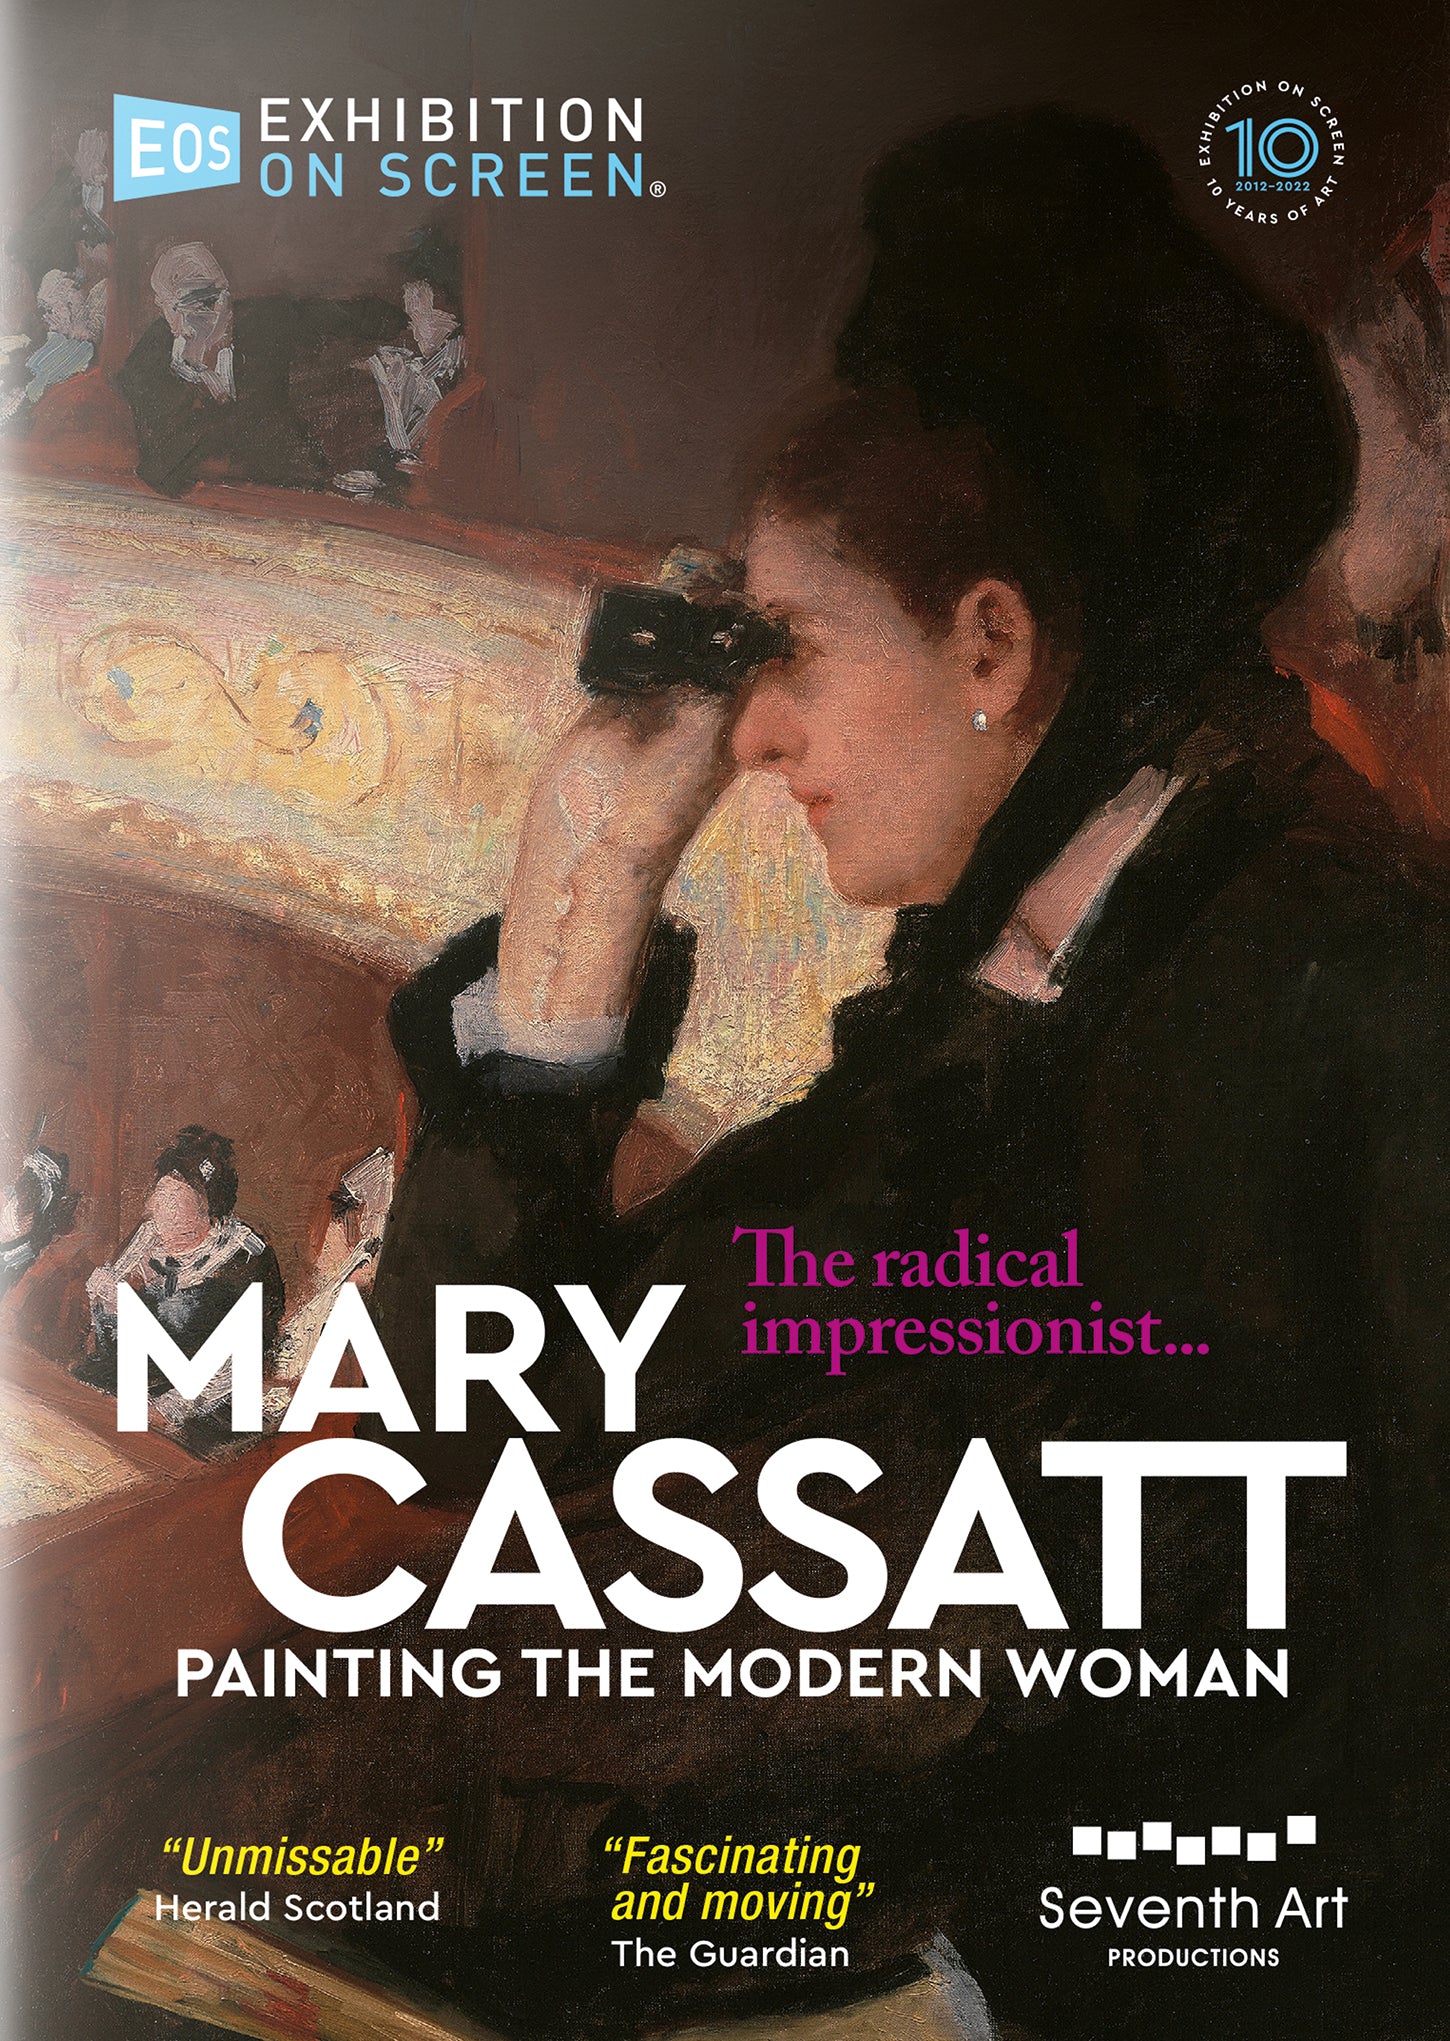 Mary Cassatt: Painting the Modern Woman [Art Documentary]